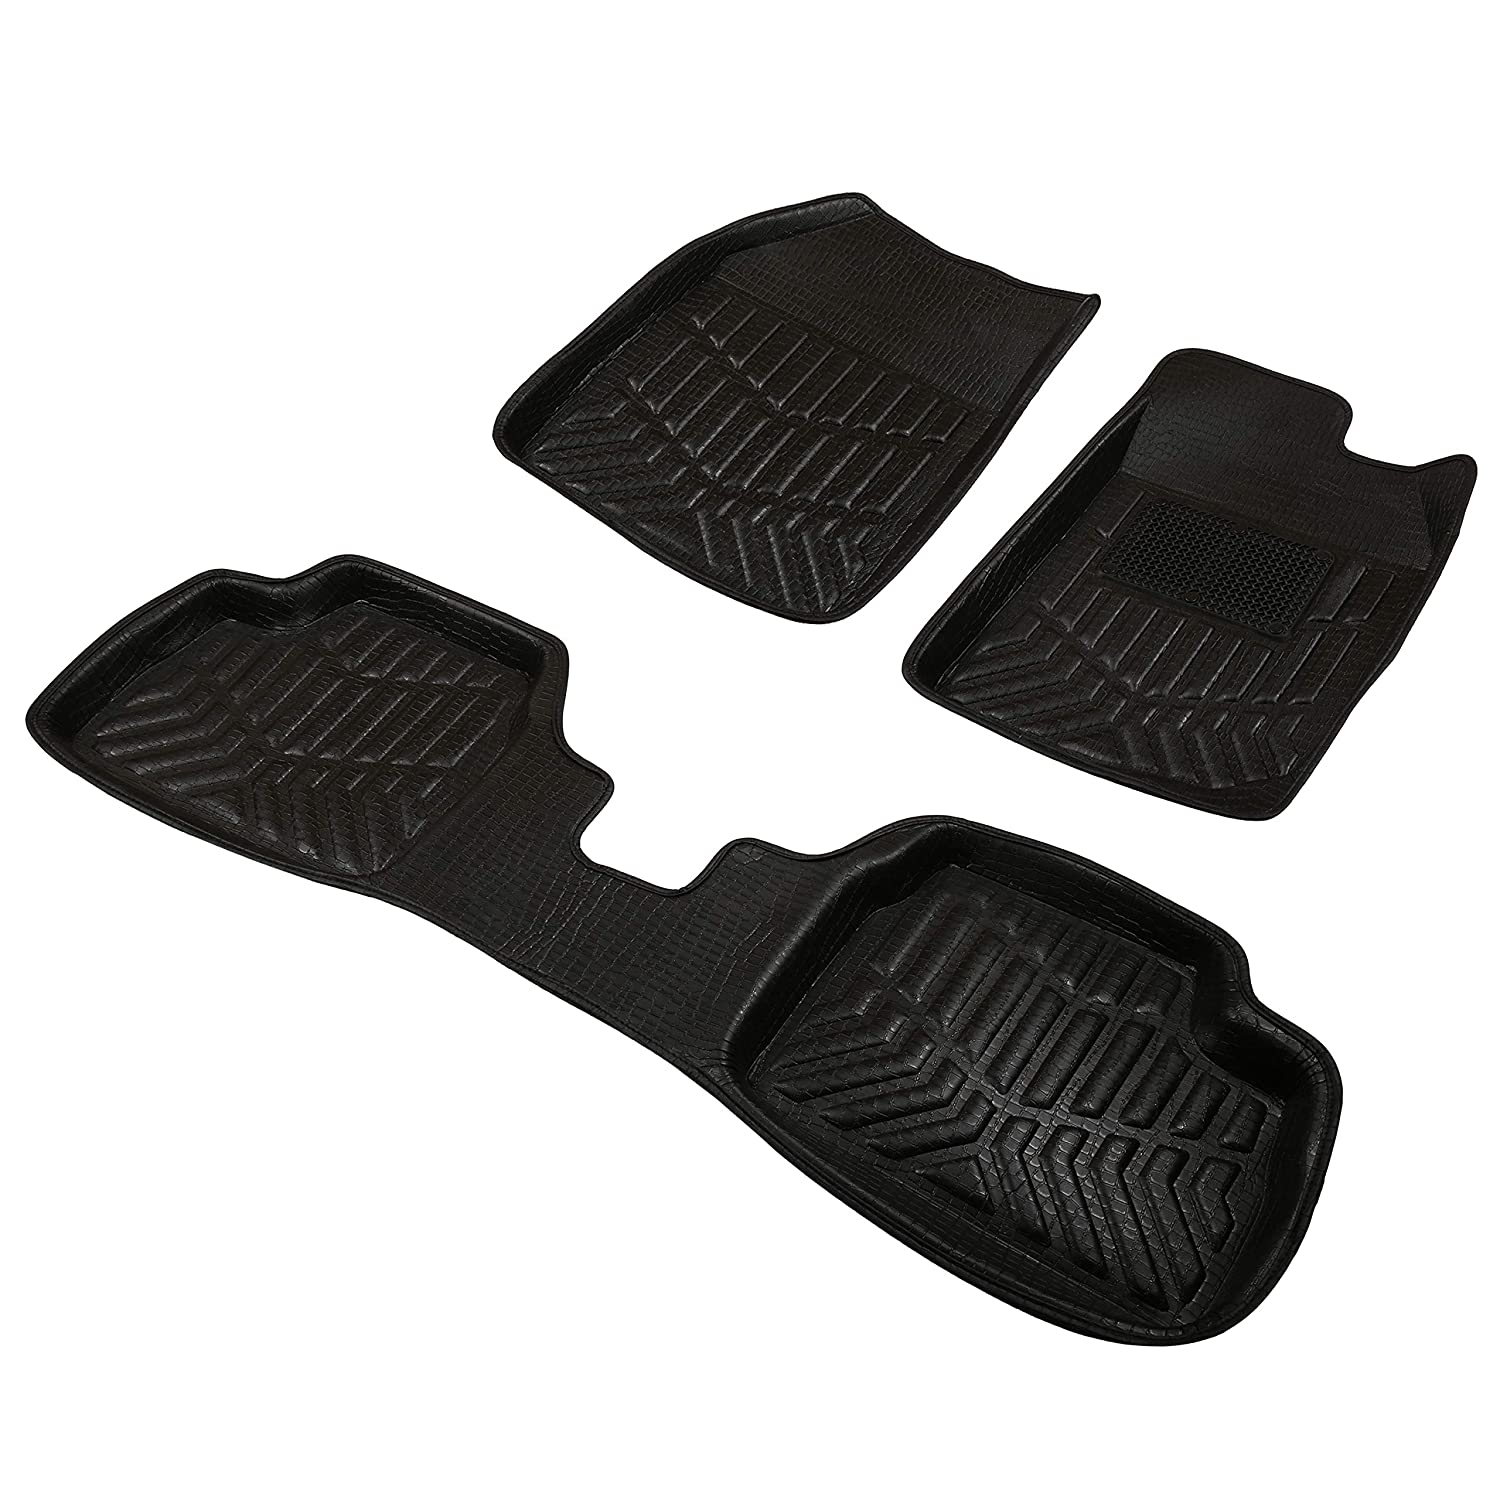 Drivn 3D Customised Car Floor Mat for Renault Kwid - Black (Set of 3)